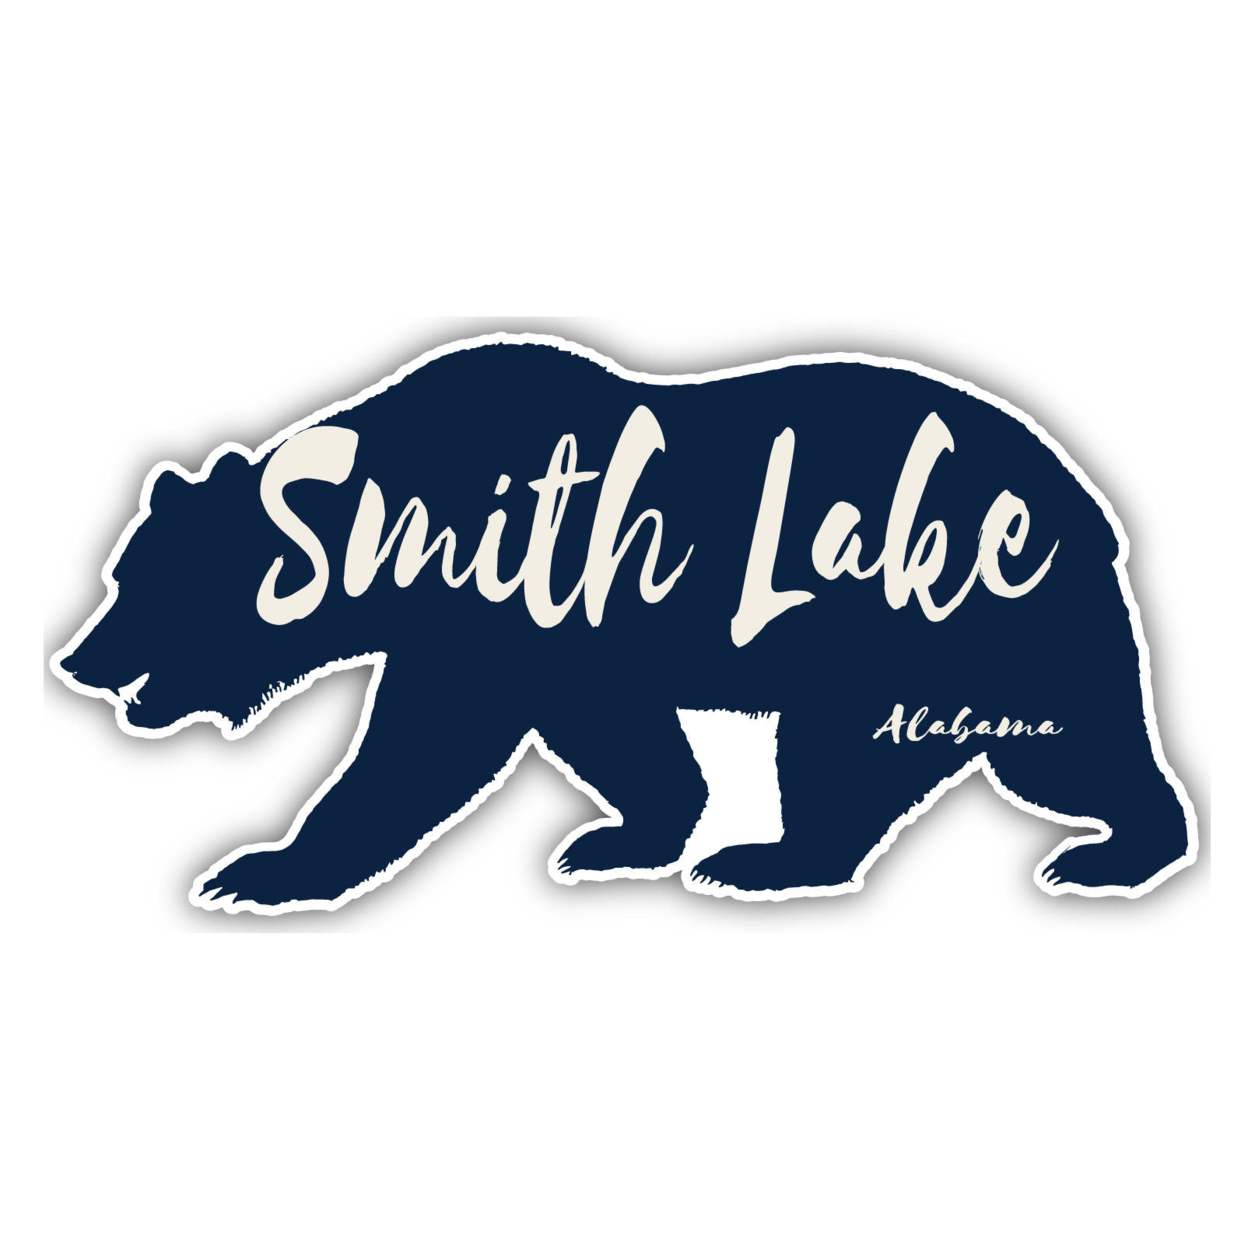 Smith Lake Alabama Souvenir Decorative Stickers (Choose Theme And Size) - Single Unit, 4-Inch, Tent